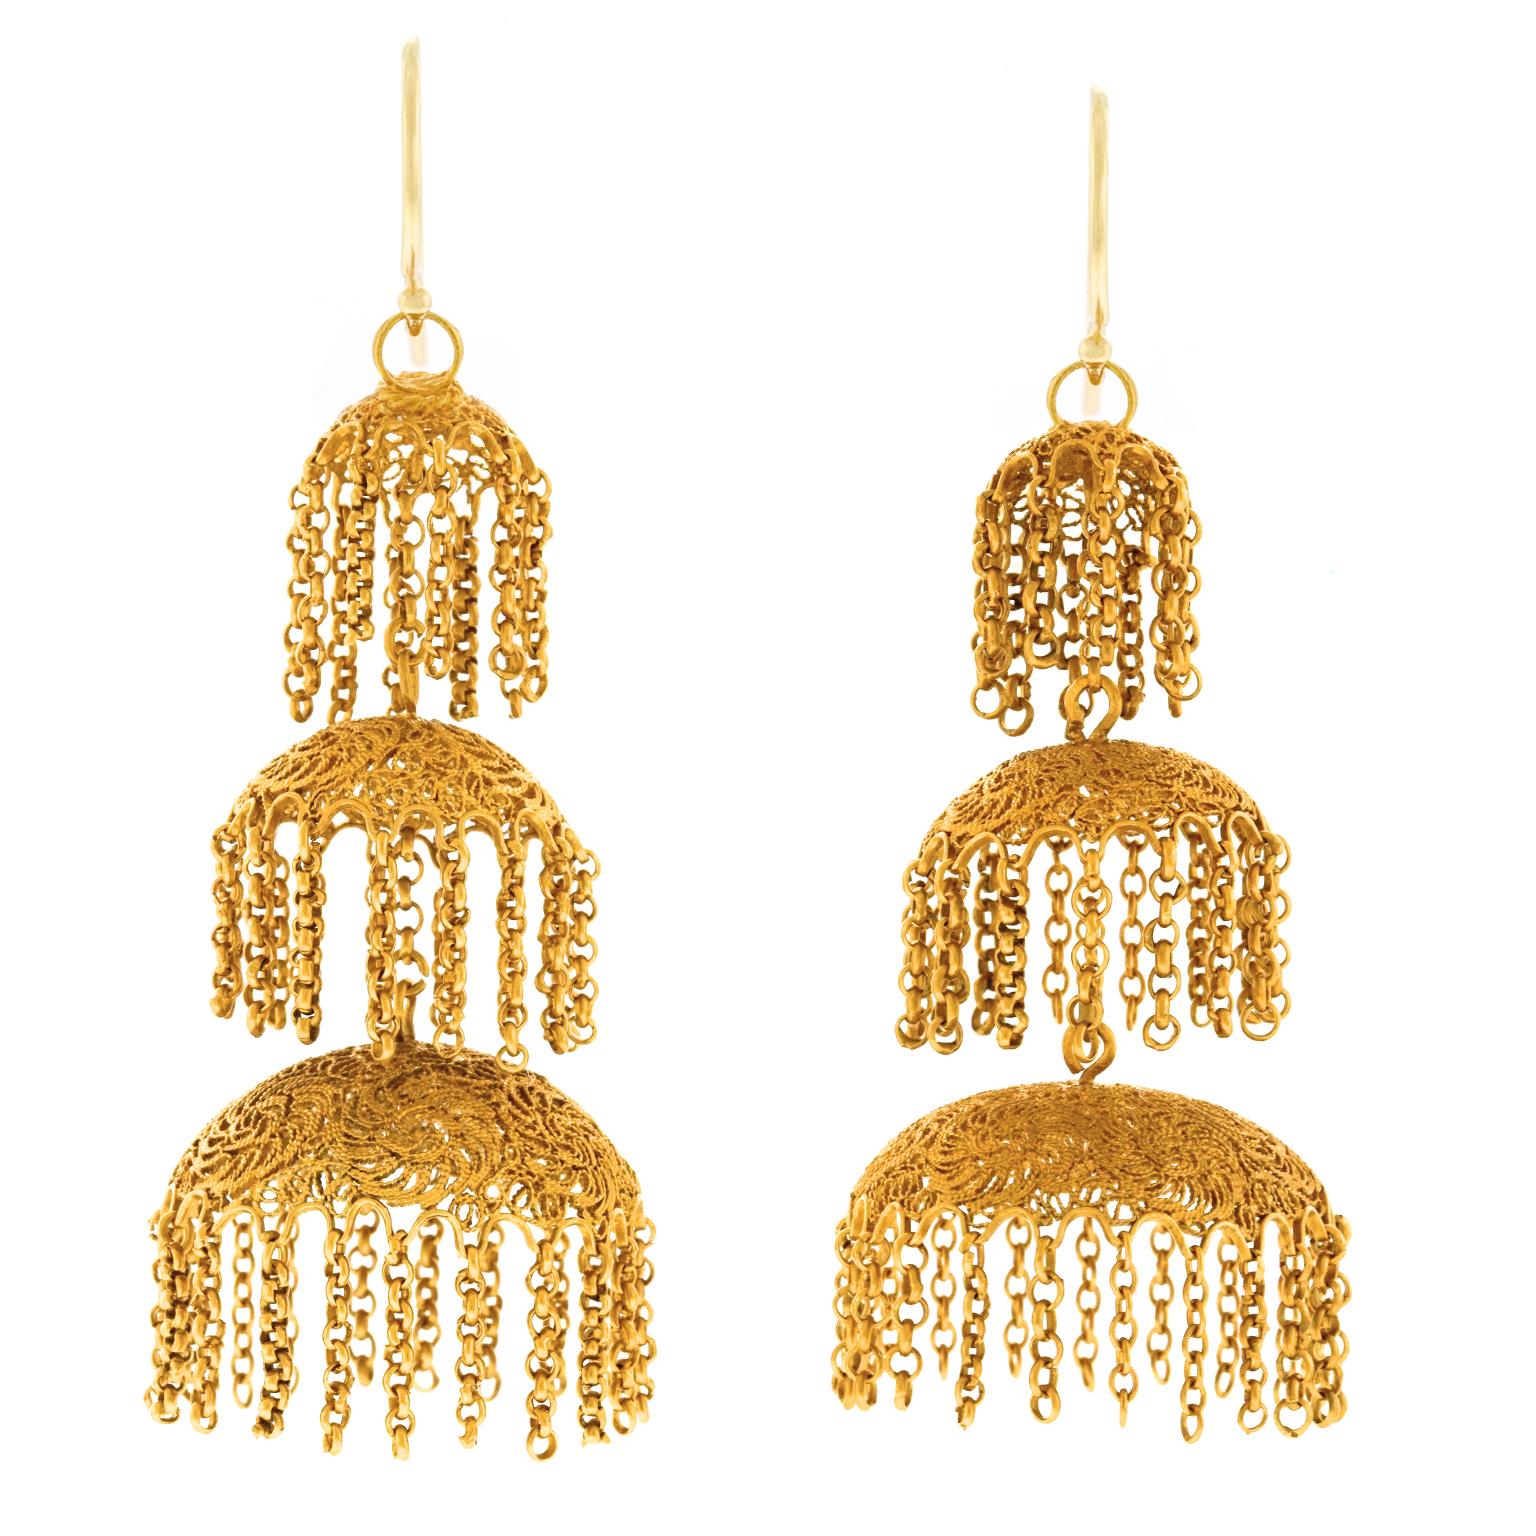 Women's Antique Anglo-Indian High Karat Gold Chandelier Earrings